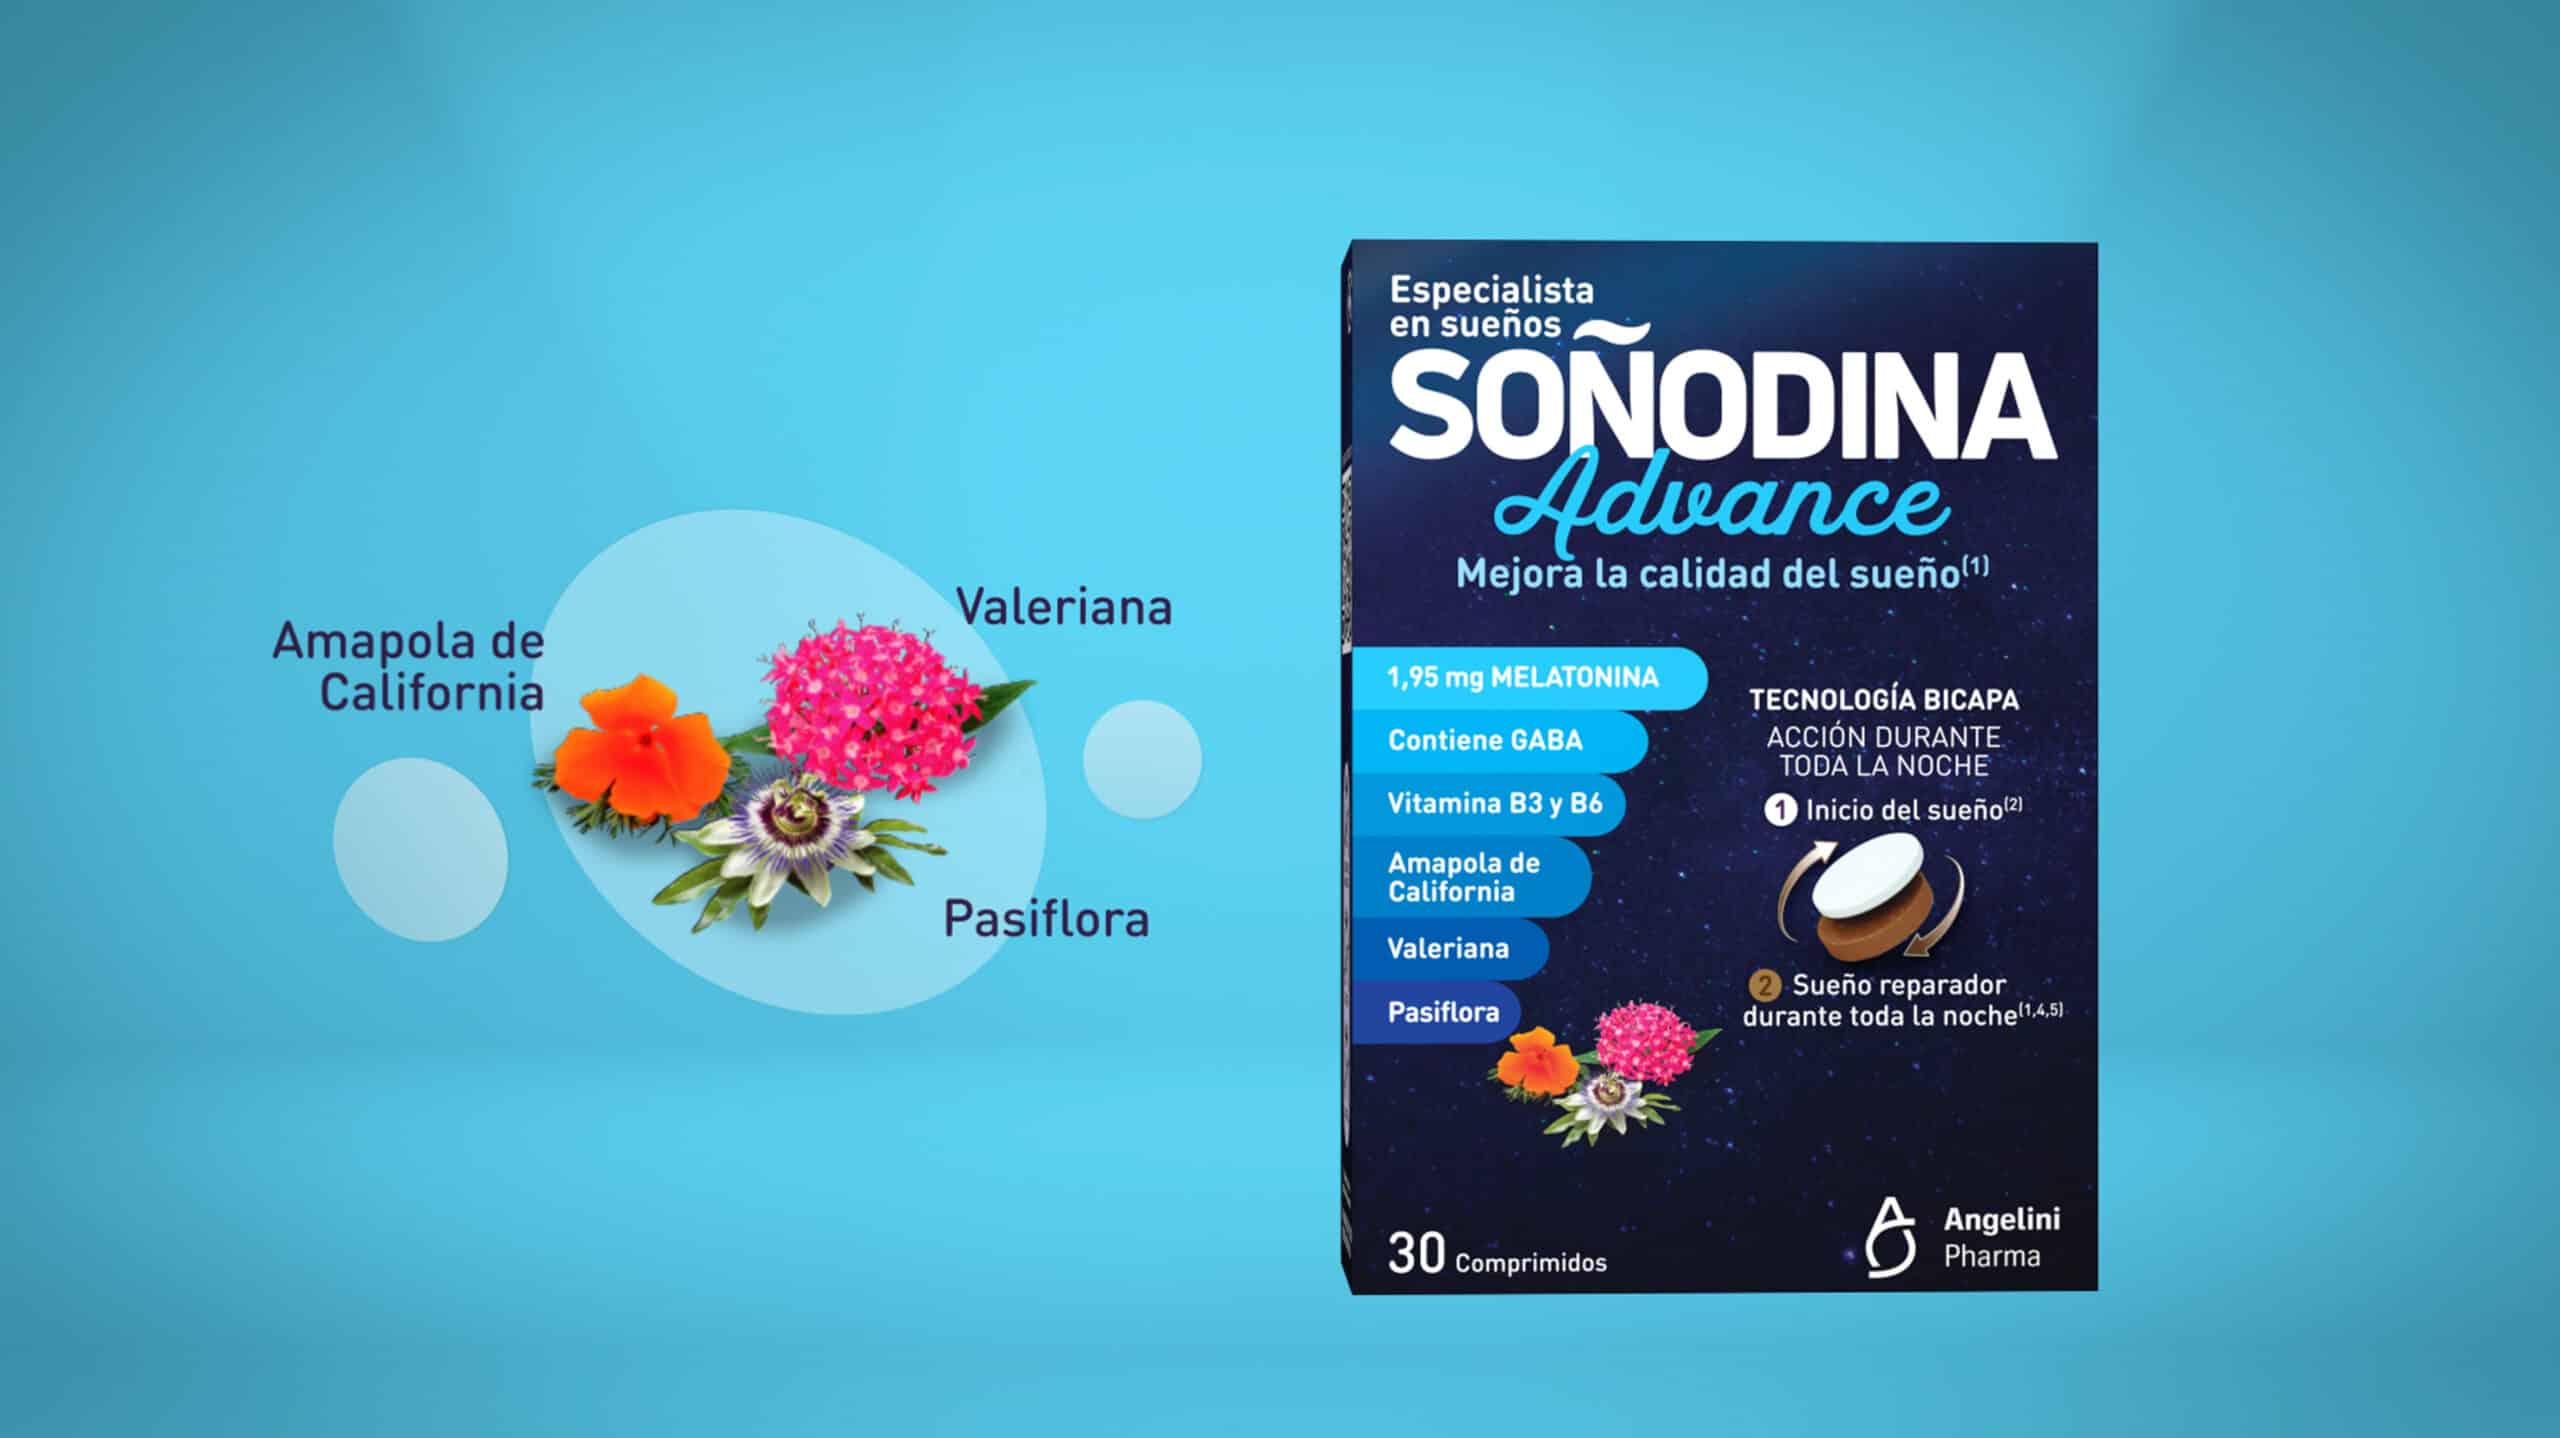 Comprar Soñodina 60 Comprimidos Bicapa Angelini - Pharmacius